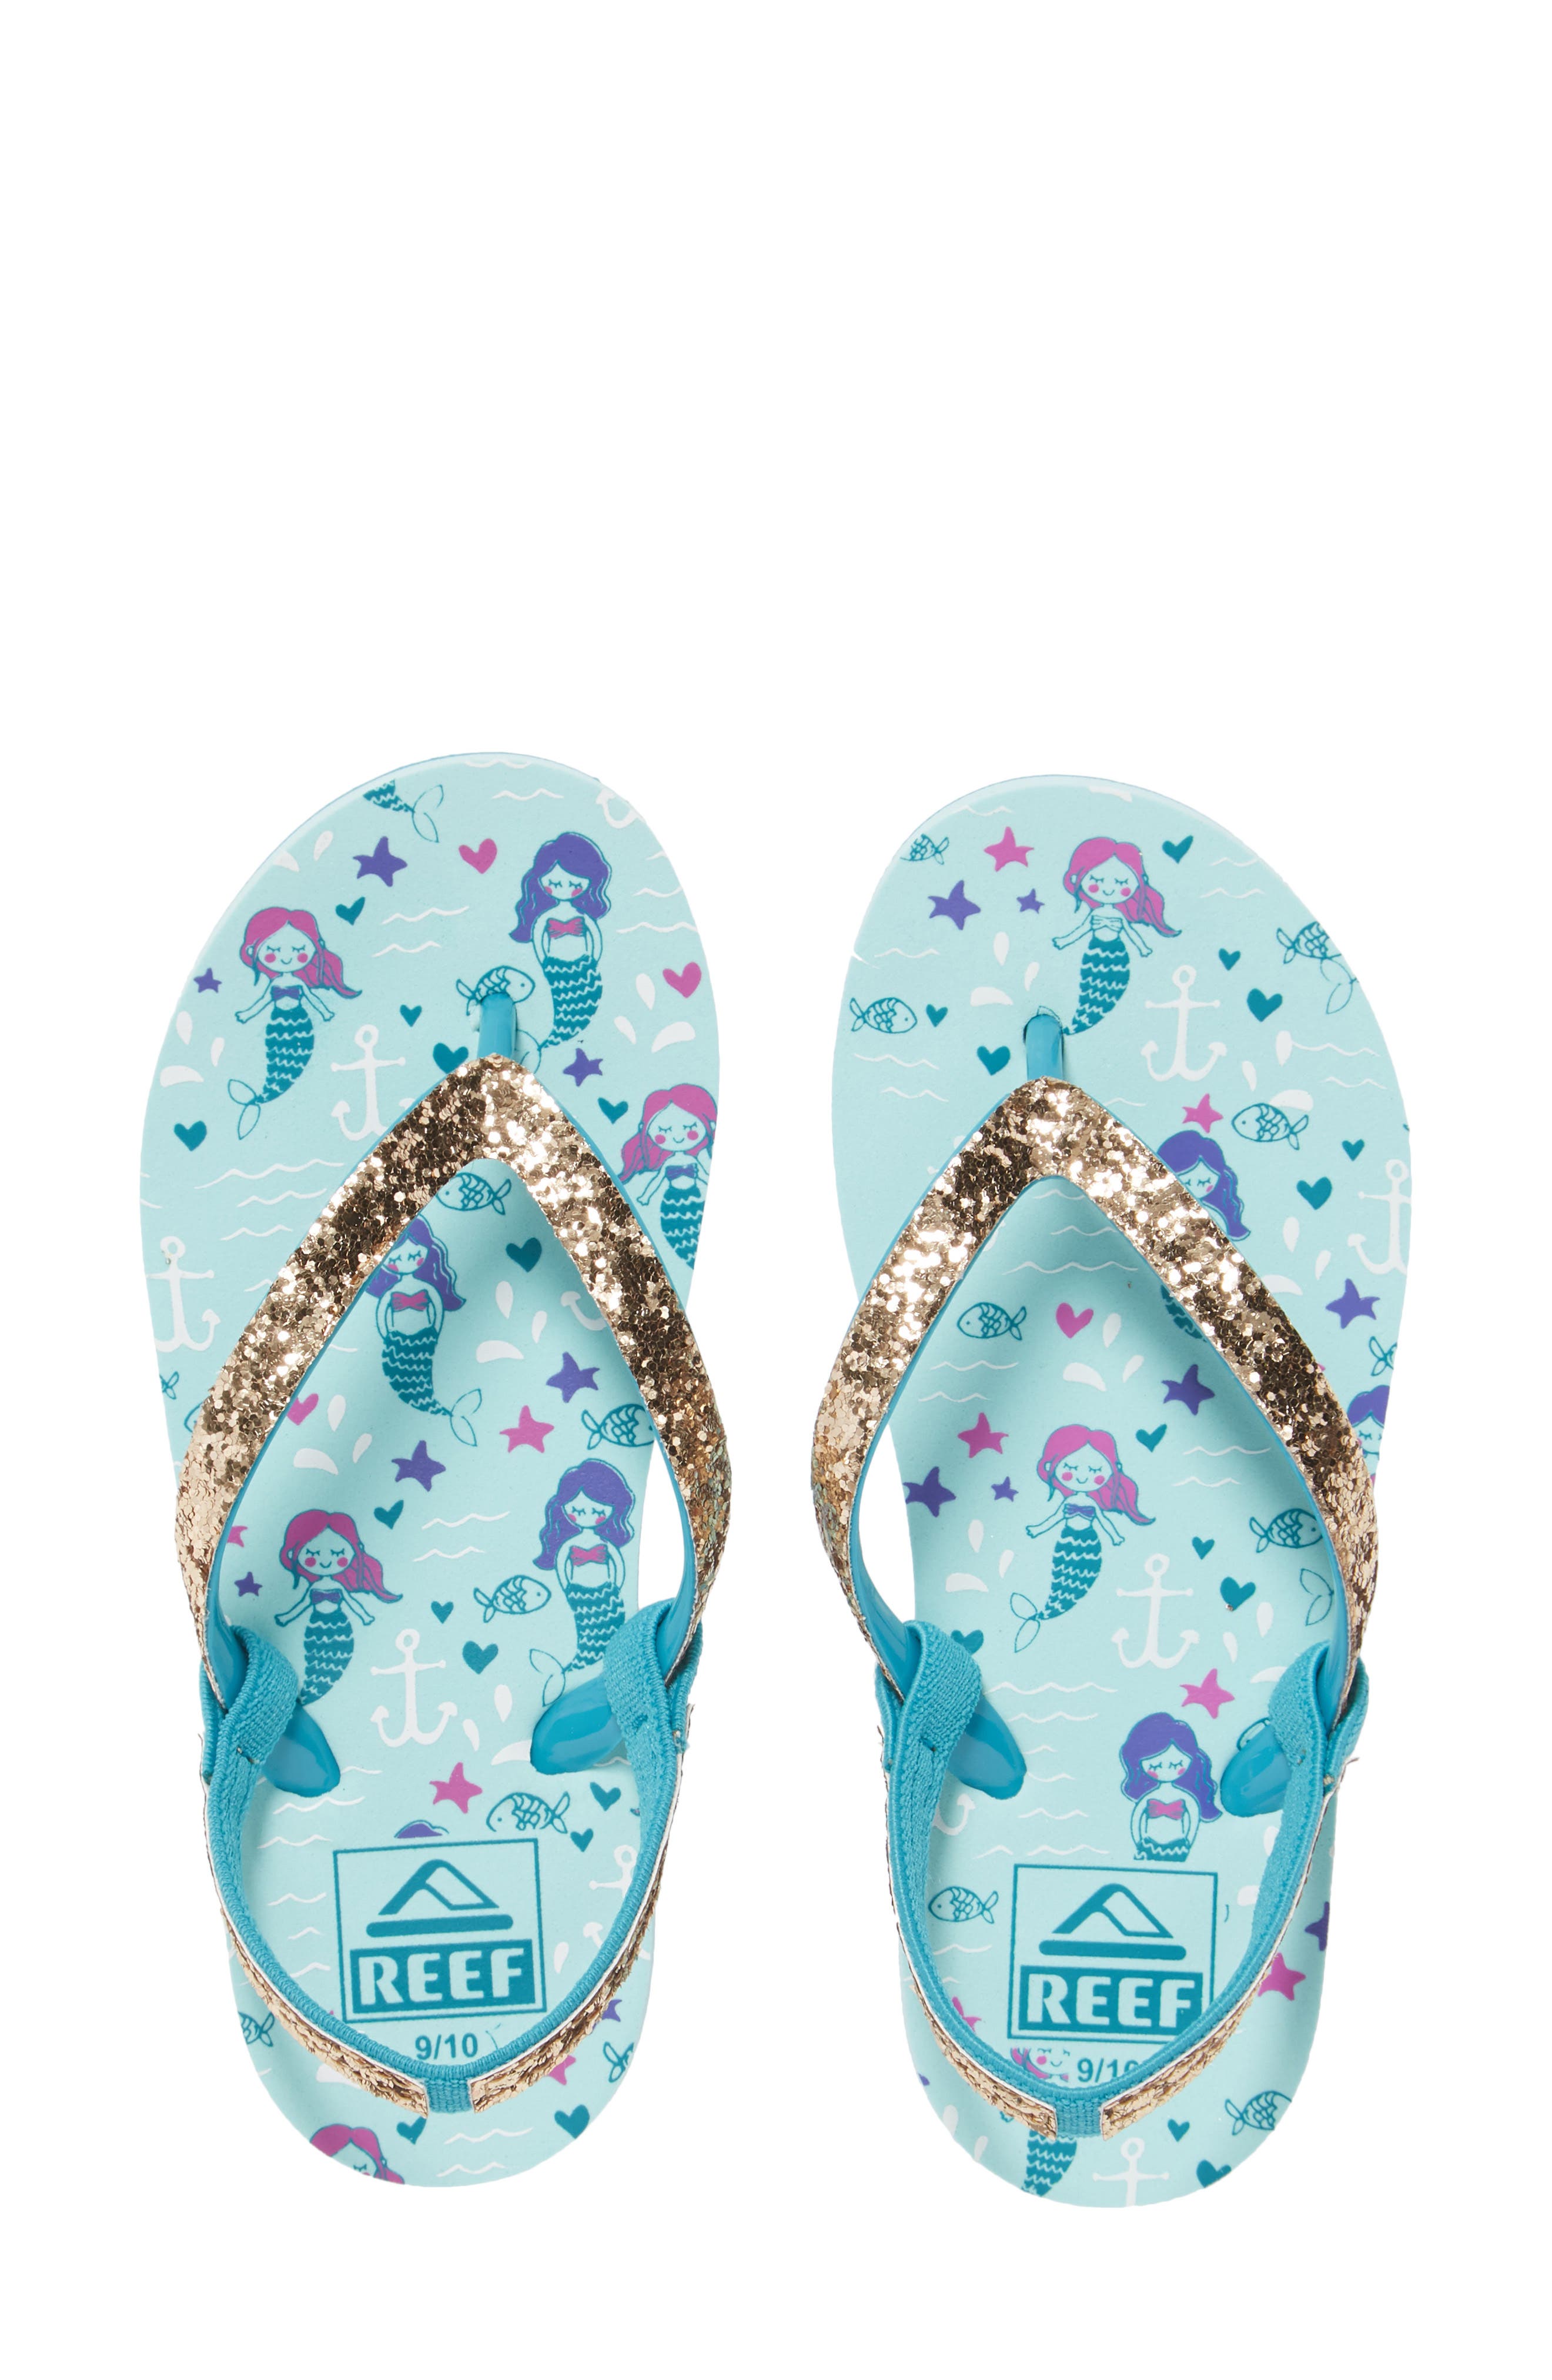 Reef Big Girl's 4/5 Stargazer Flip Flops Sandals Pink Mermaid Sparkles Glitter